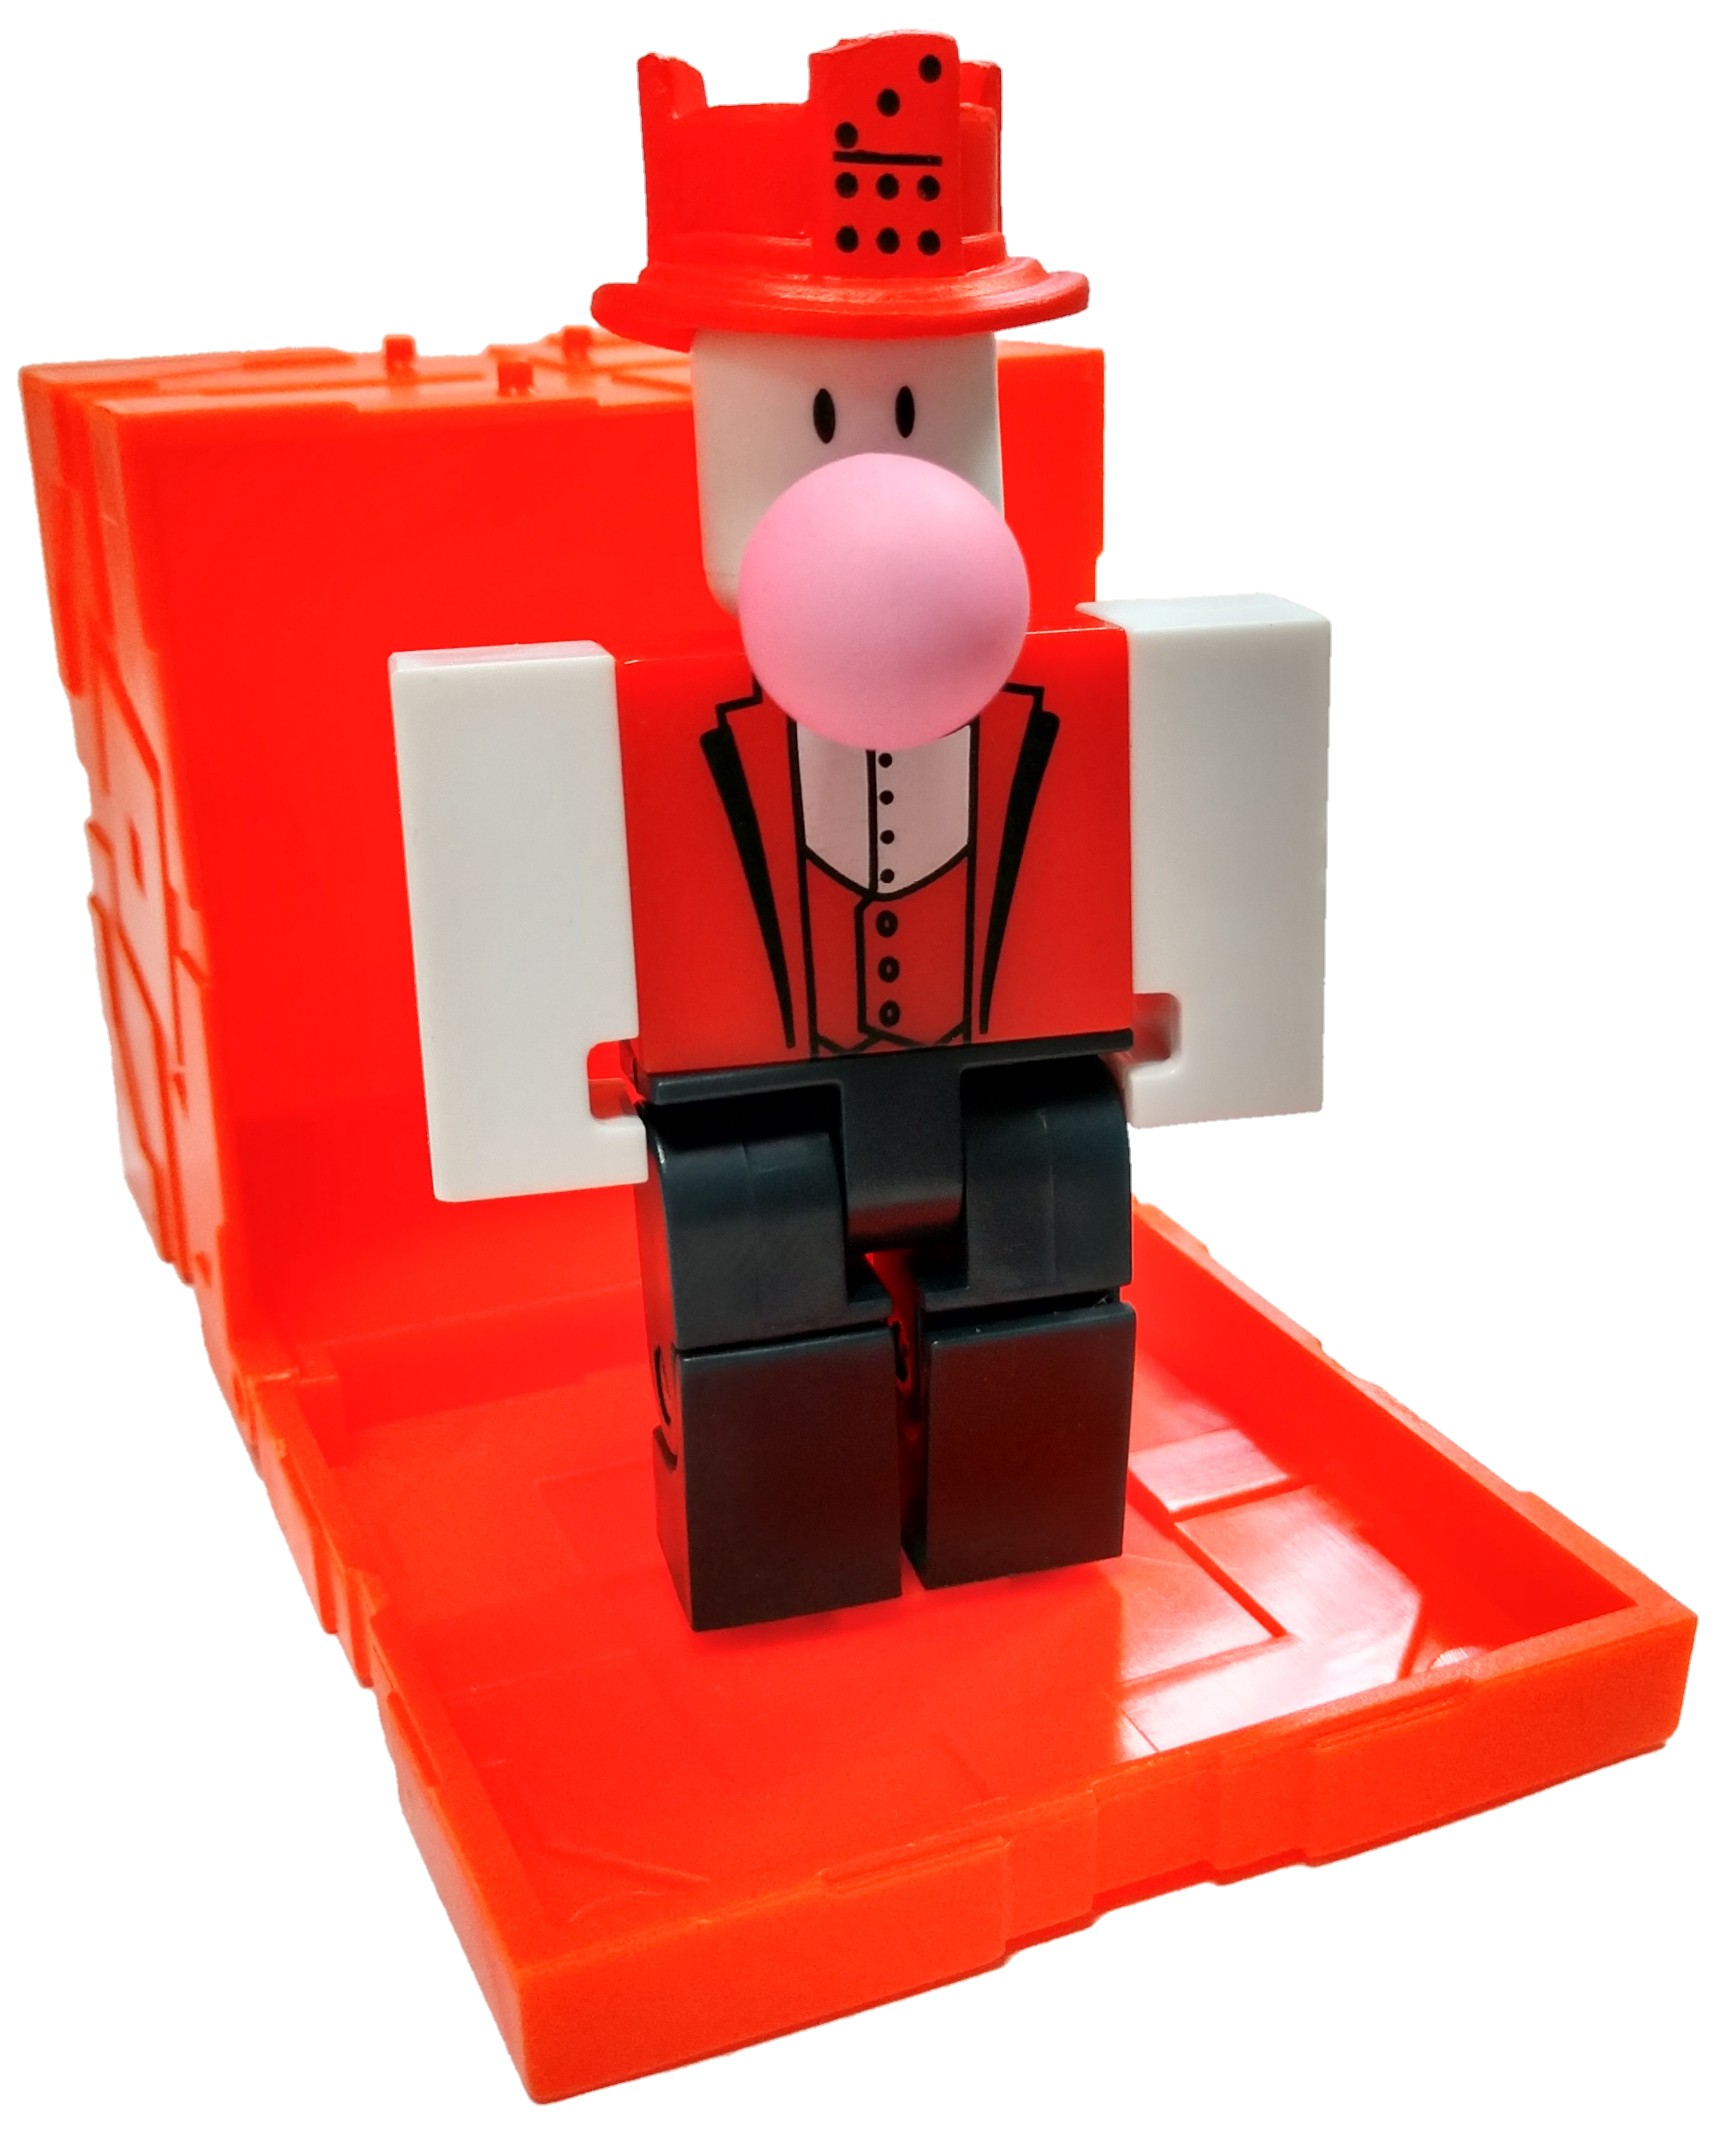 Roblox Series 6 4sci Mini Figure With Online Code 666714325251 Ebay - roblox serie vermelha 4 mini boneco imaginaerum com codigo online